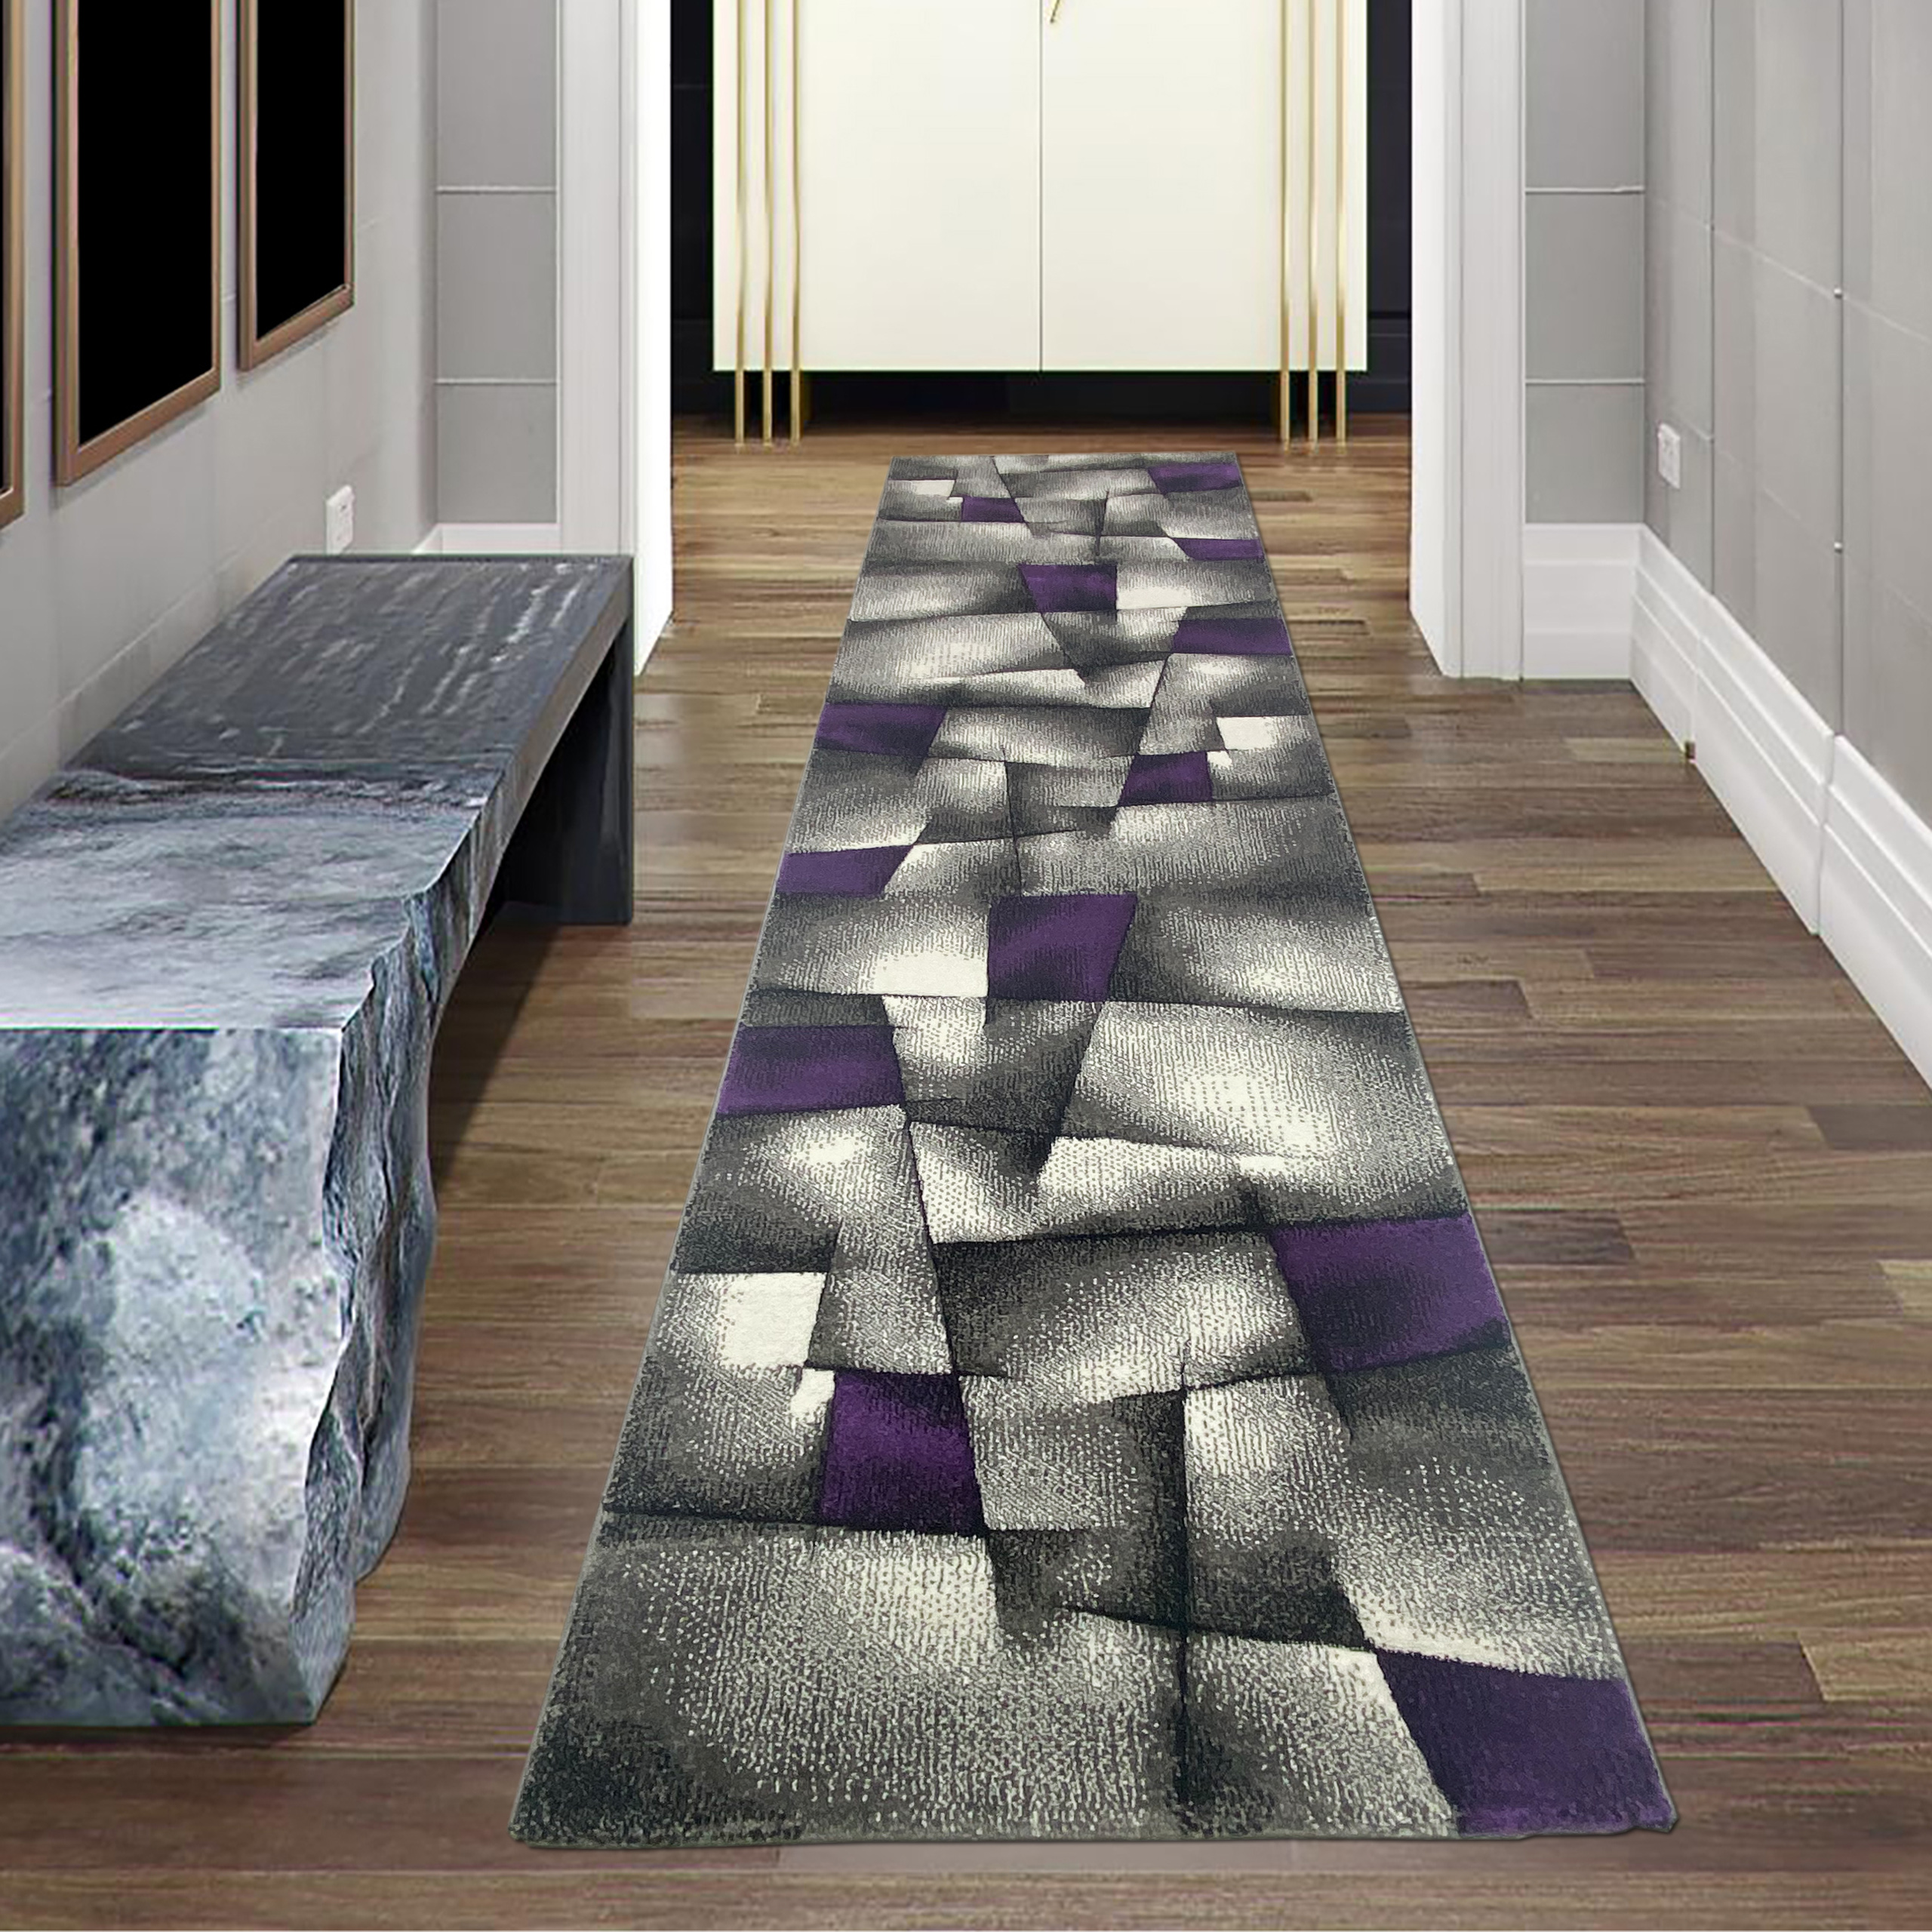 carpets: cheap at & and designer -Traum Modern Teppich - dreams High-quality carpet